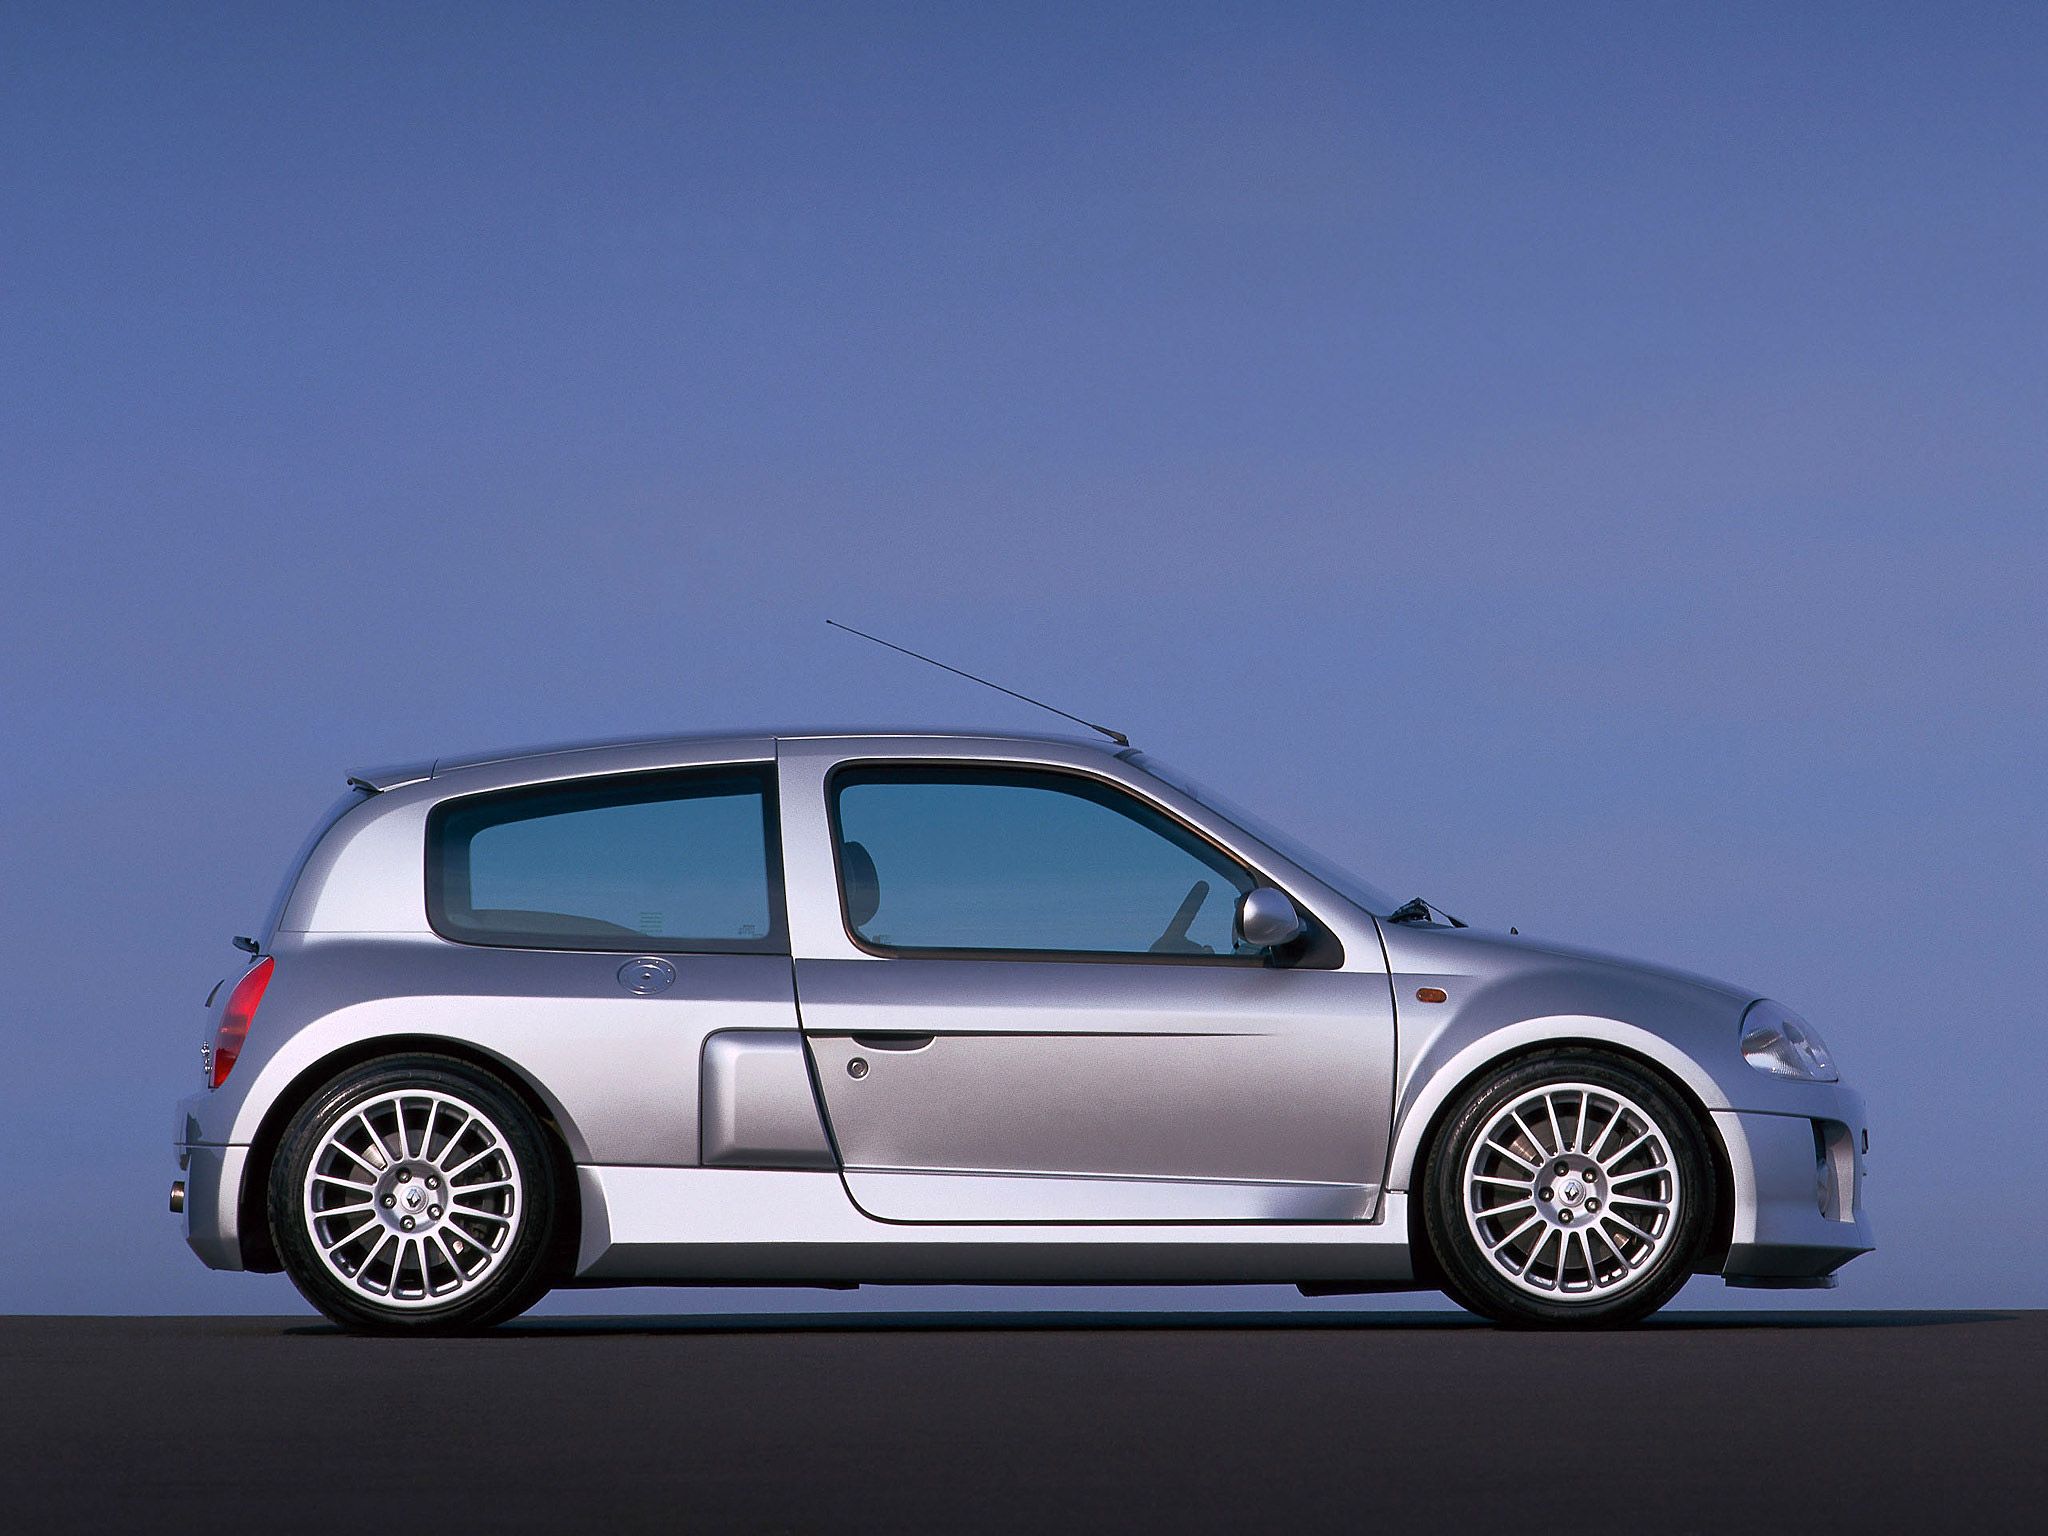  2000 Renault Clio V6 Wallpaper.